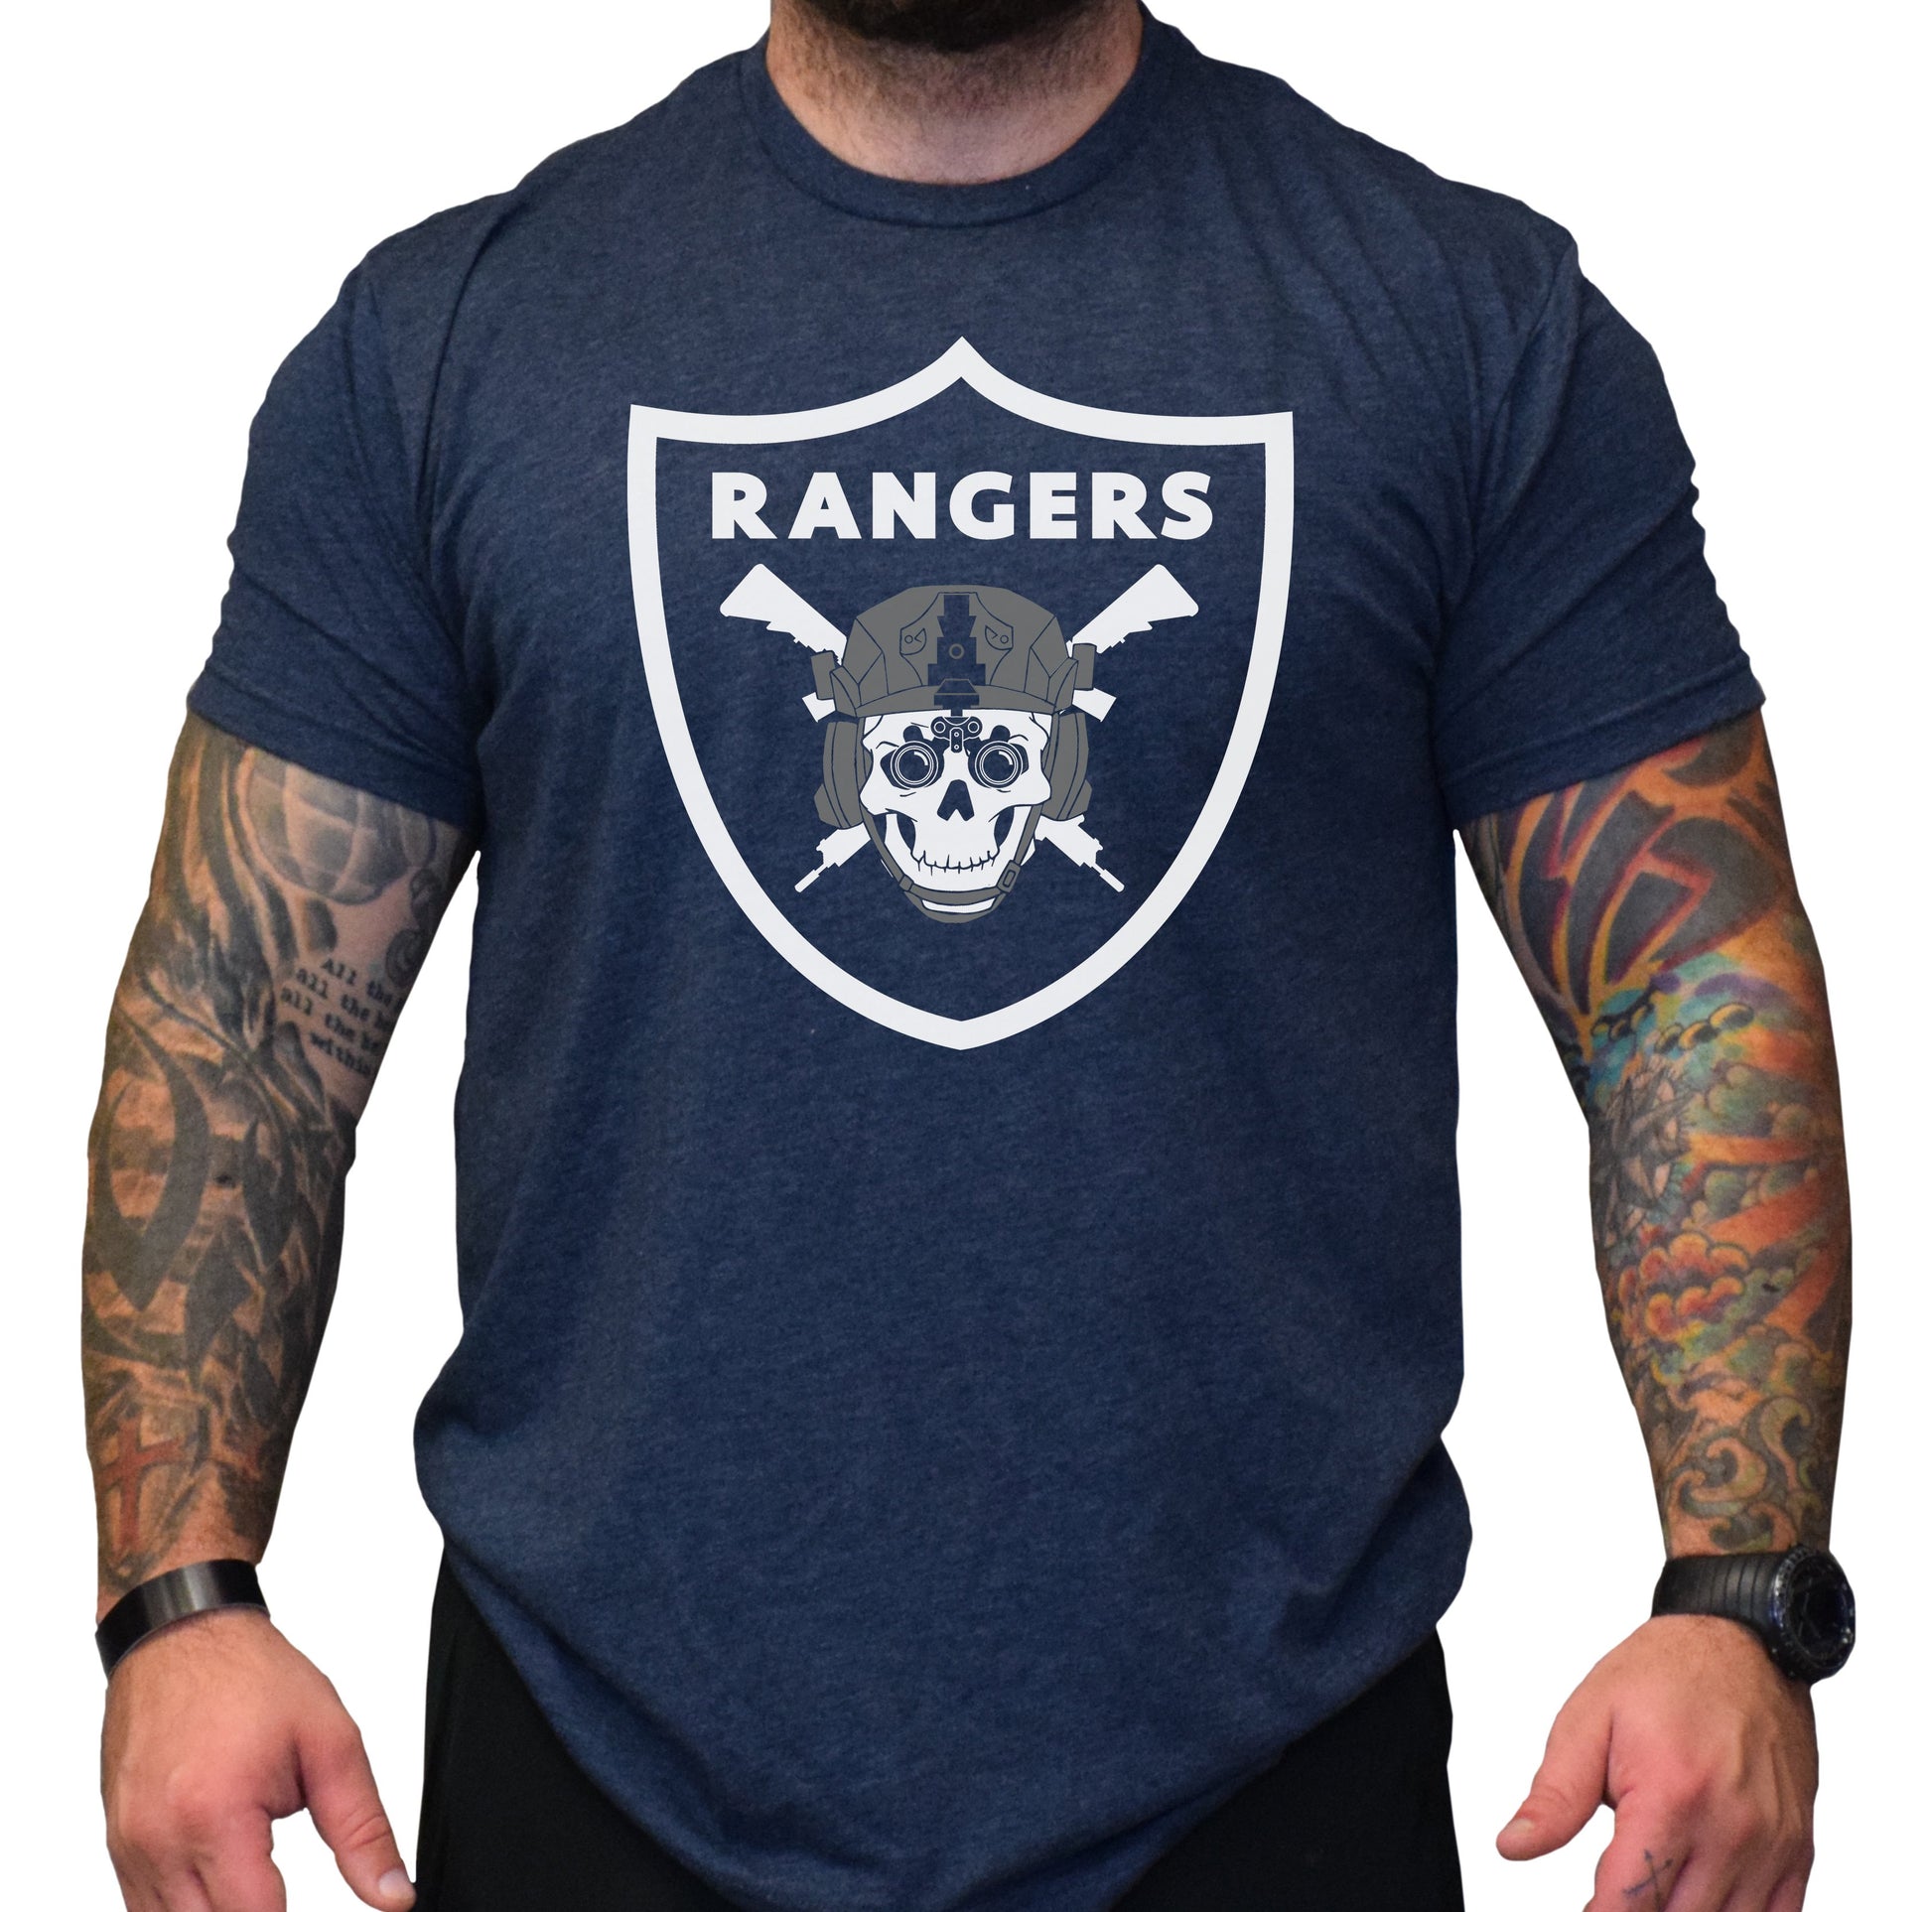 Ranger Raider – US Army Ranger Association